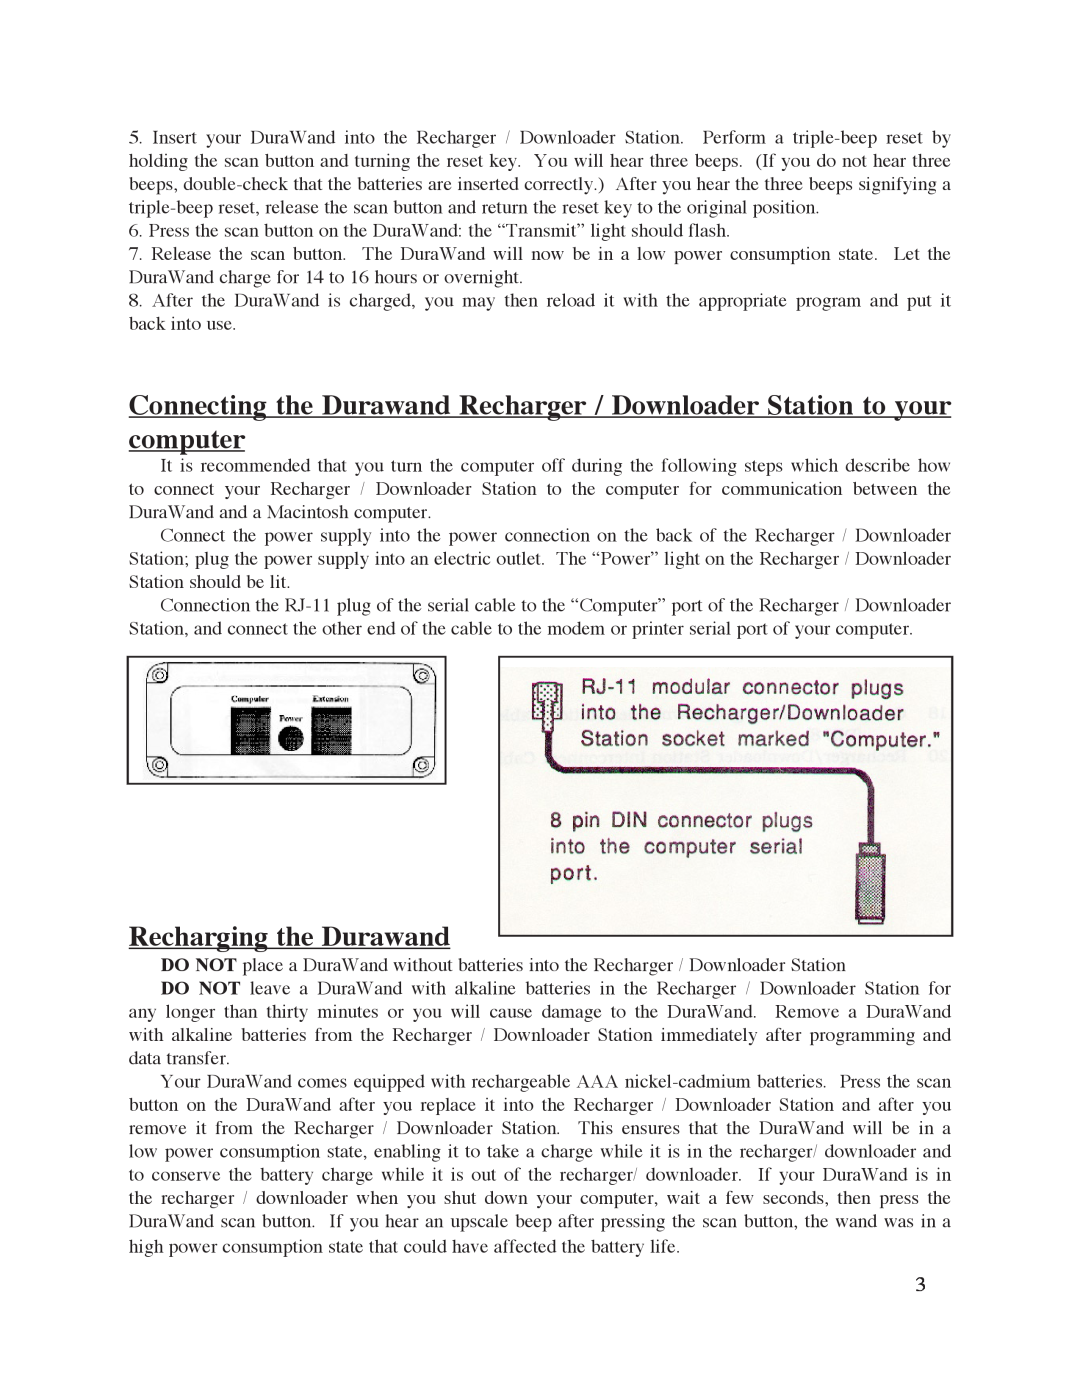 Keyspan DuraWand Portable Scanner manual Recharging the Durawand 